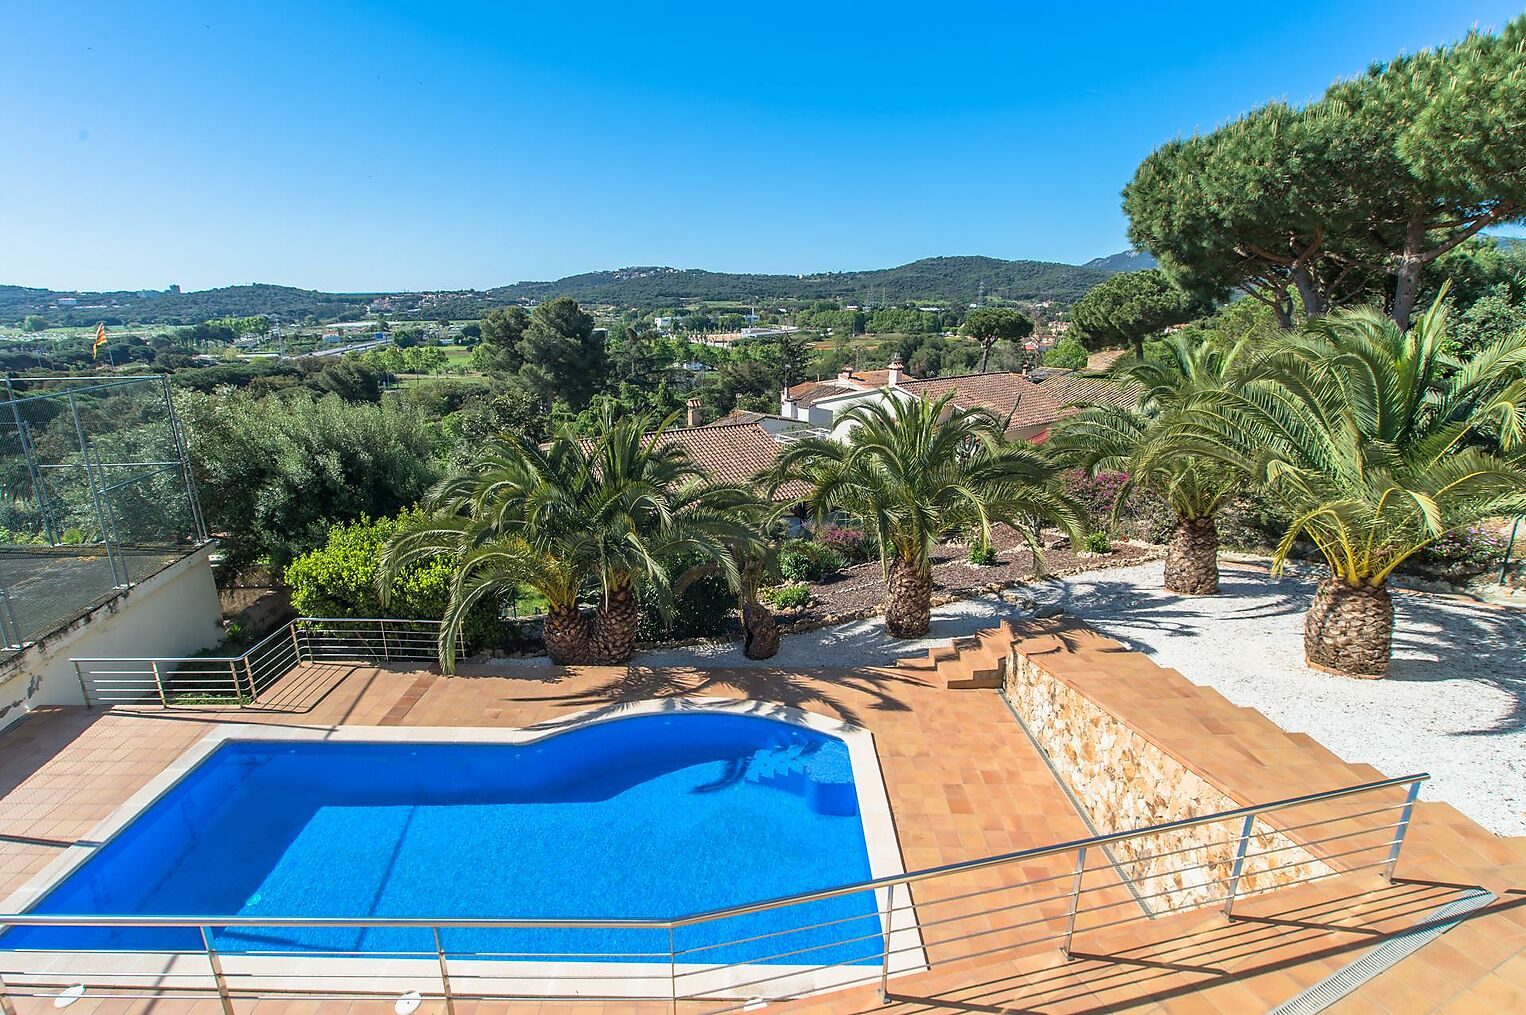 4 bedroom villa in Platja d'Aro with stunning sea views